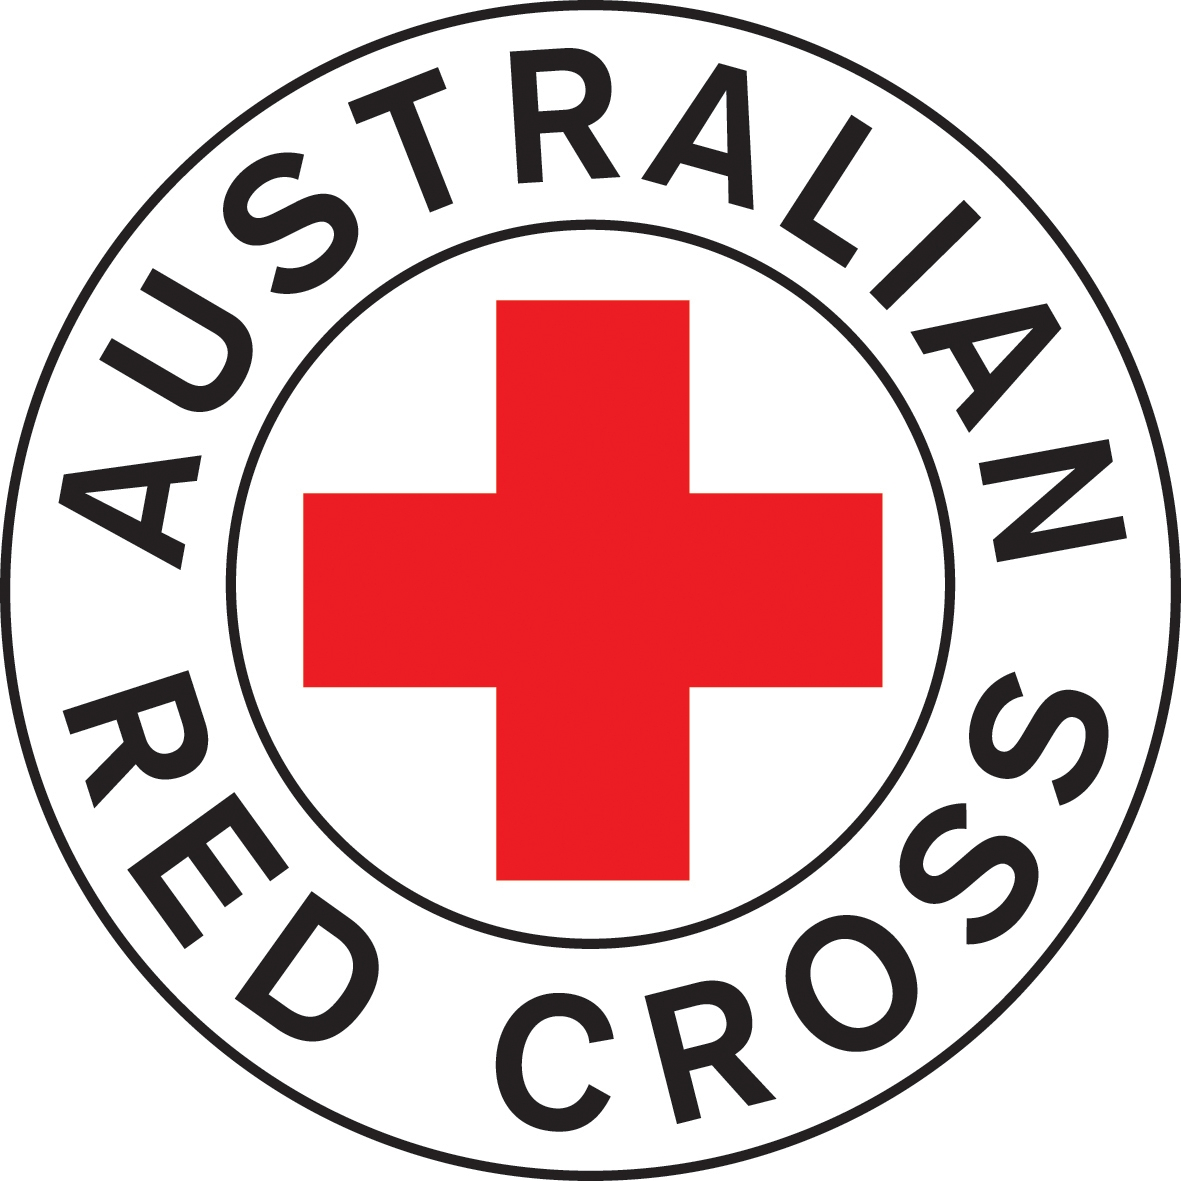 The Australian Red Cross